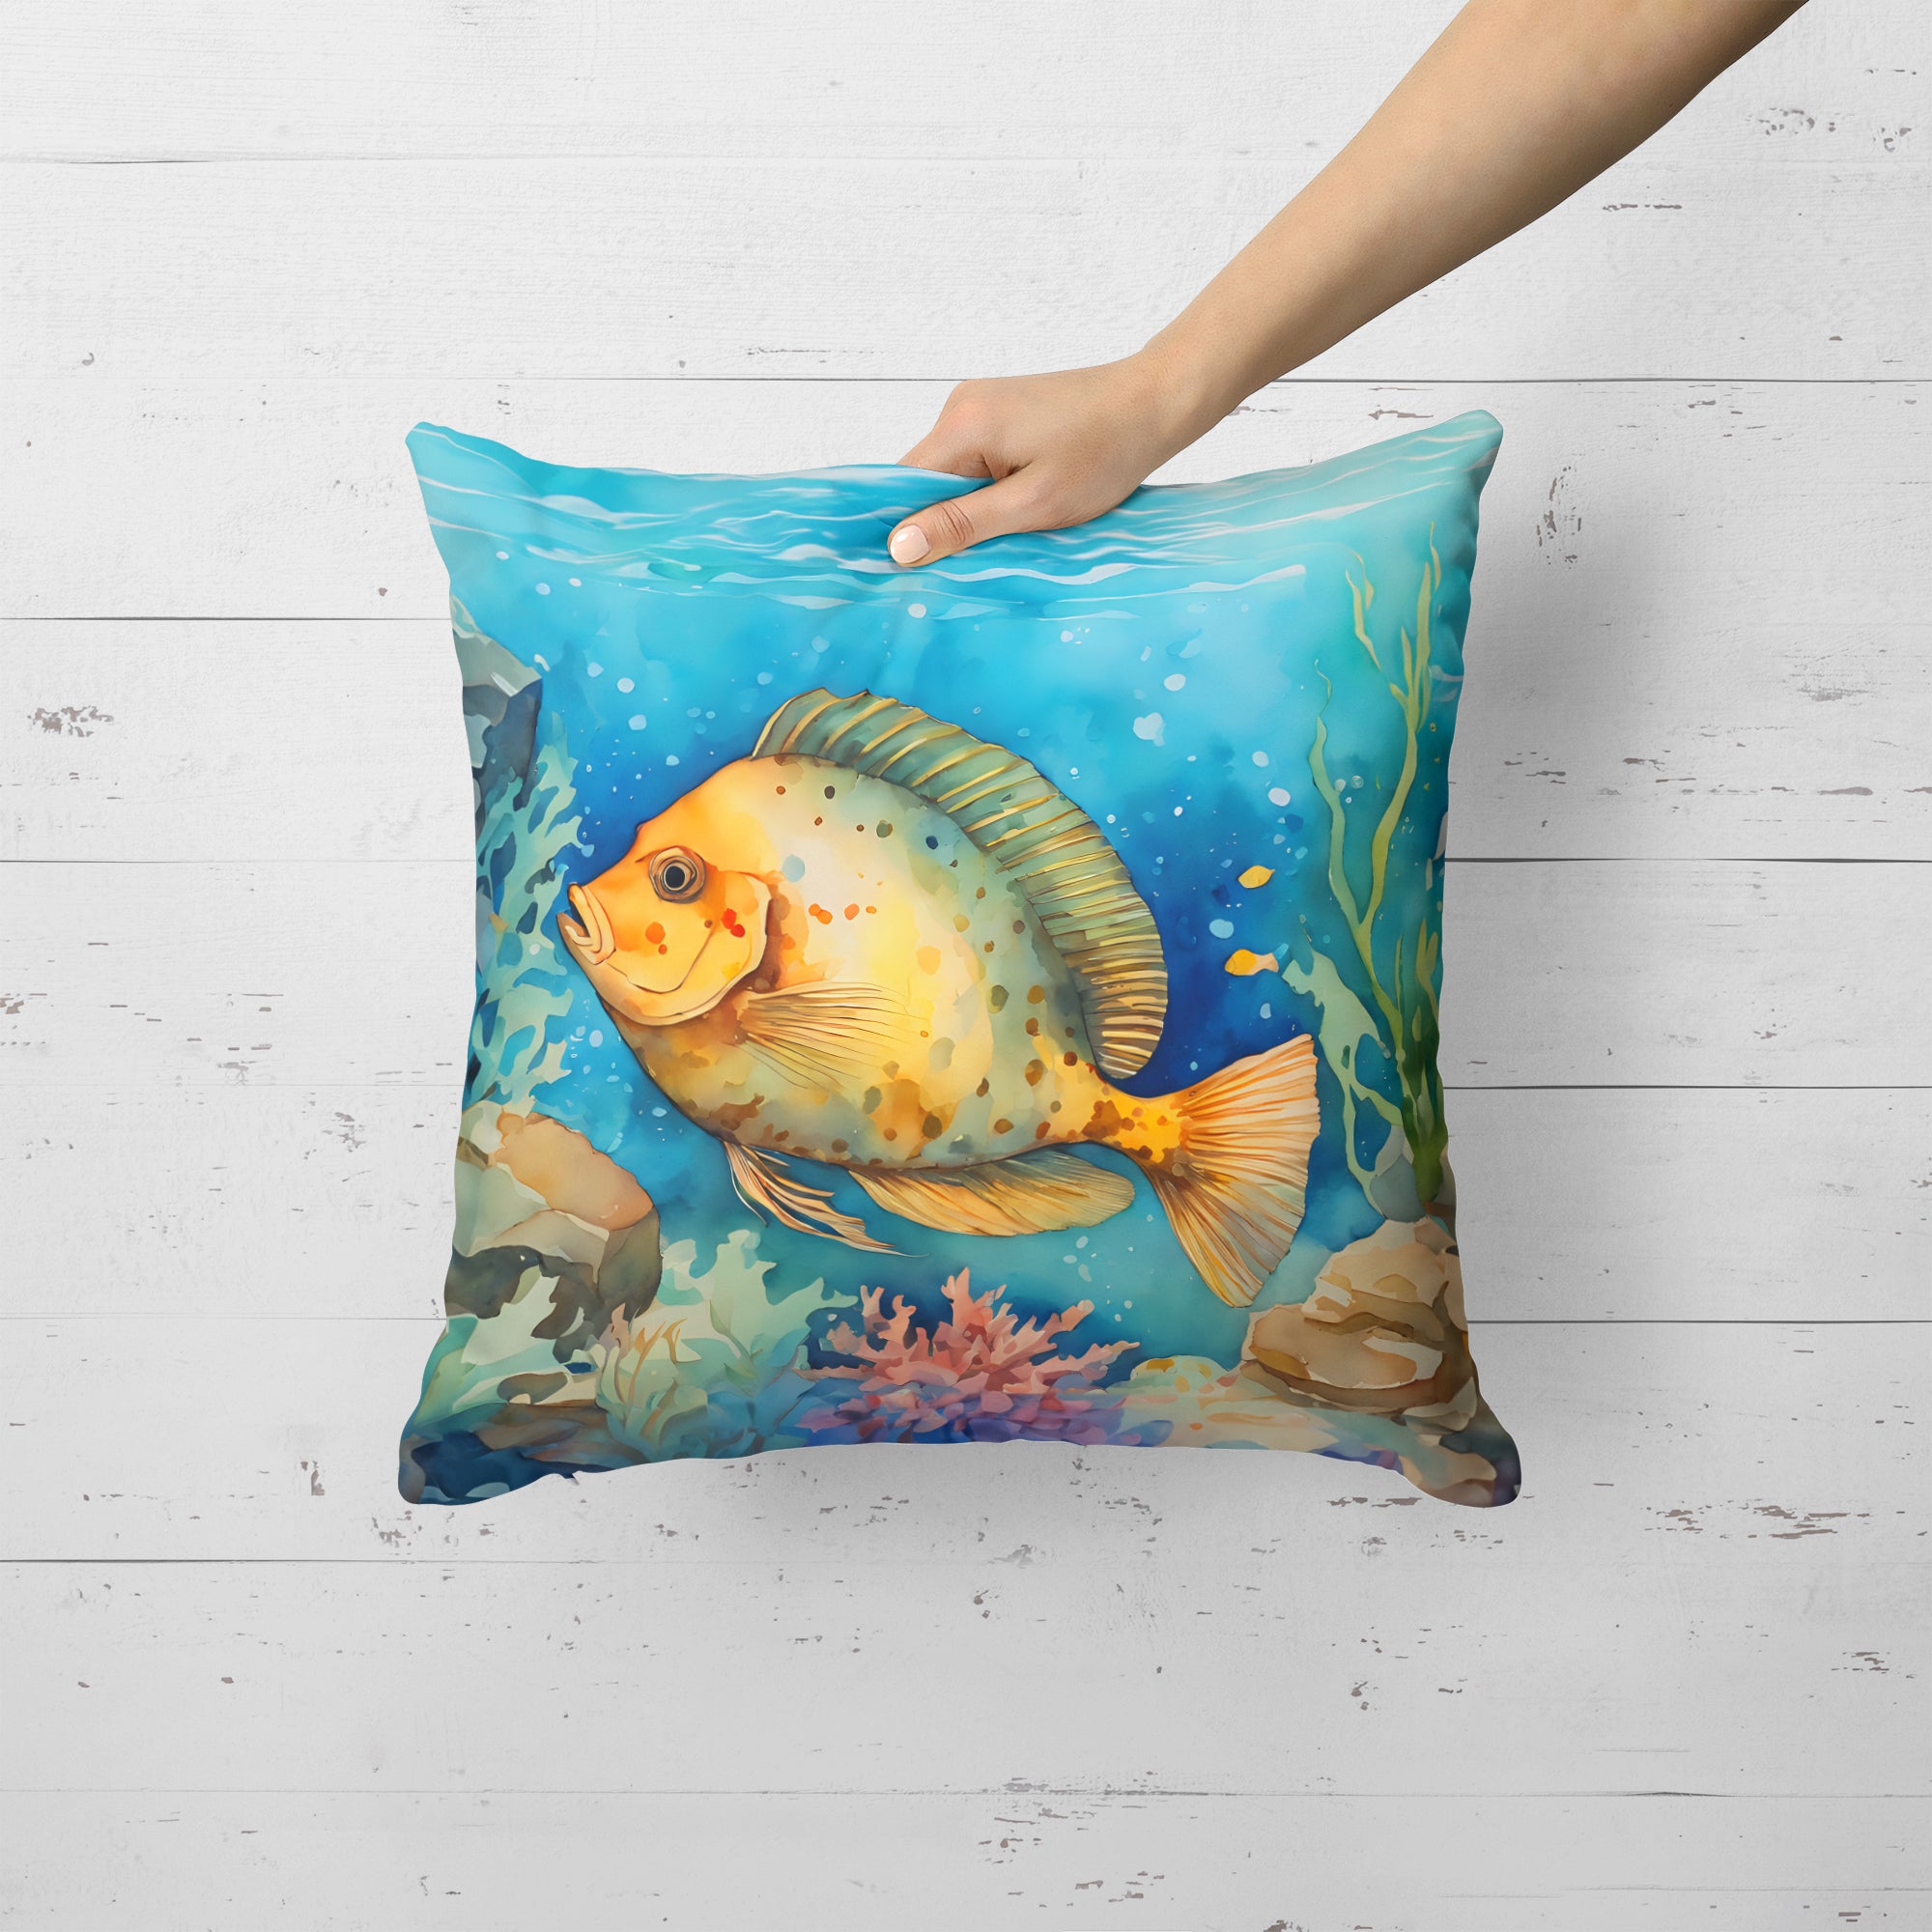 Buy this Flounder Throw Pillow